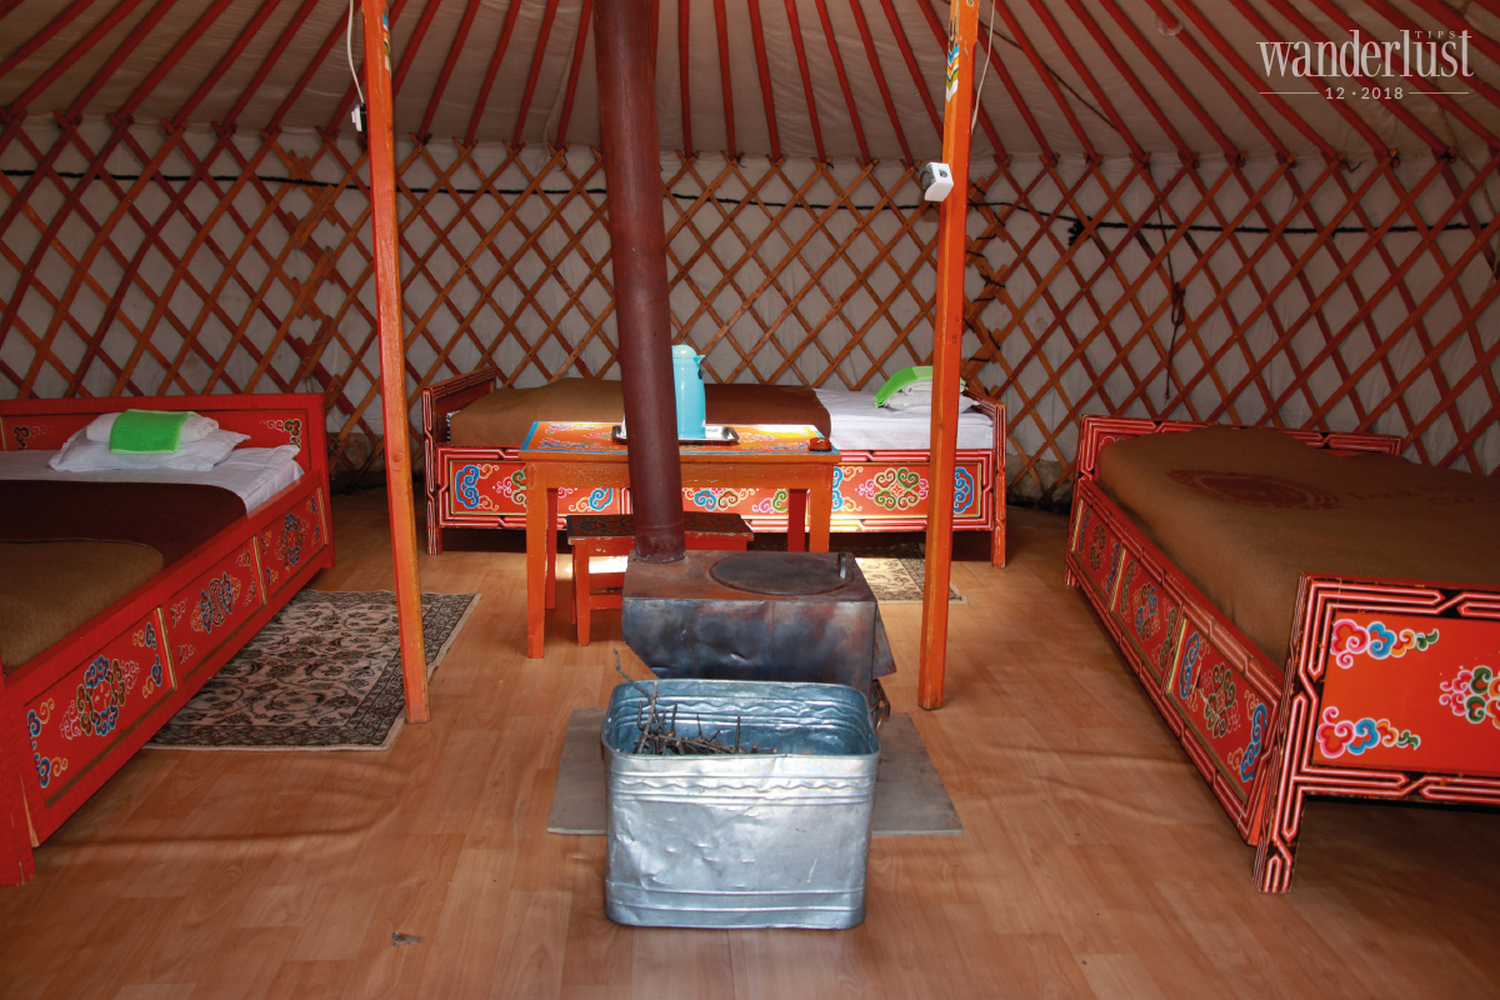 Wanderlust Tips Magazine | The unique yurt tent of the Mongols